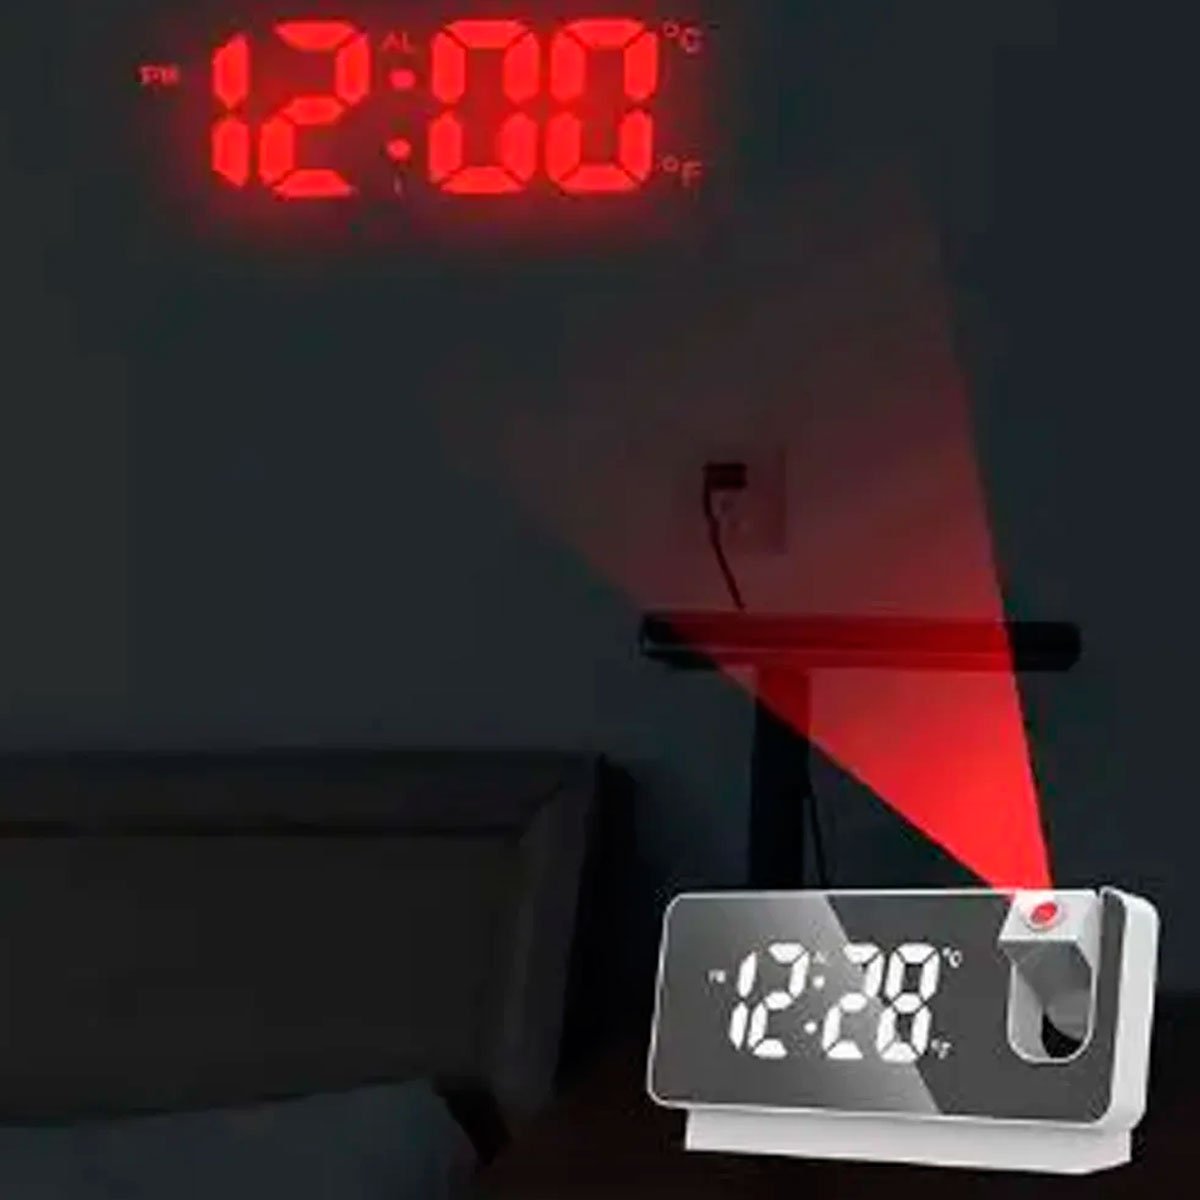 07 relogio multifuncional projetor de horas despertador alarme